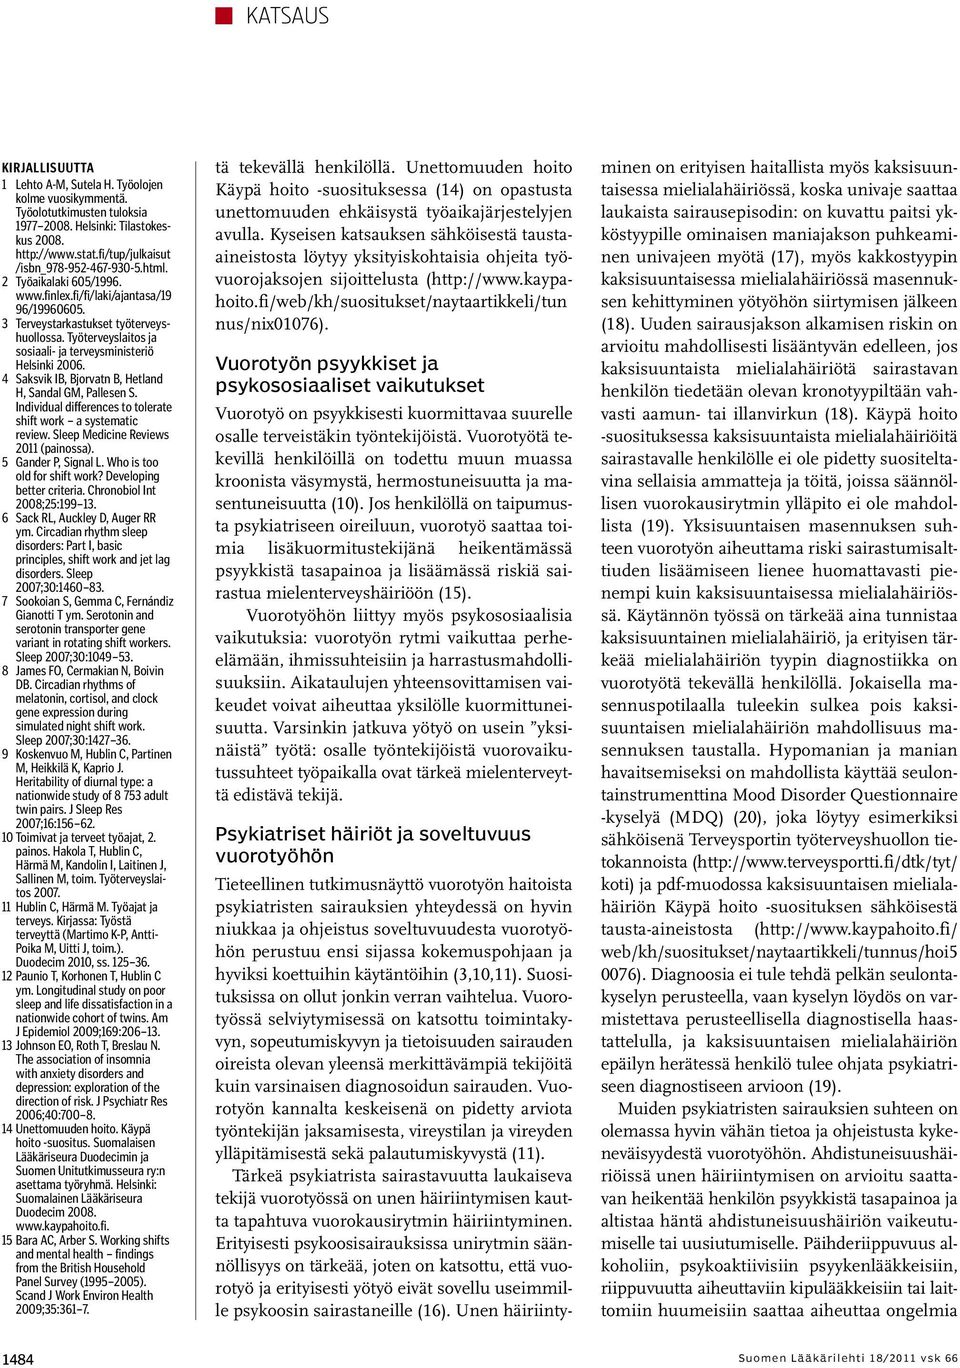 Työterveyslaitos ja sosiaali- ja terveysministeriö Helsinki 2006. 4 Saksvik IB, Bjorvatn B, Hetland H, Sandal GM, Pallesen S. Individual differences to tolerate shift work a systematic review.